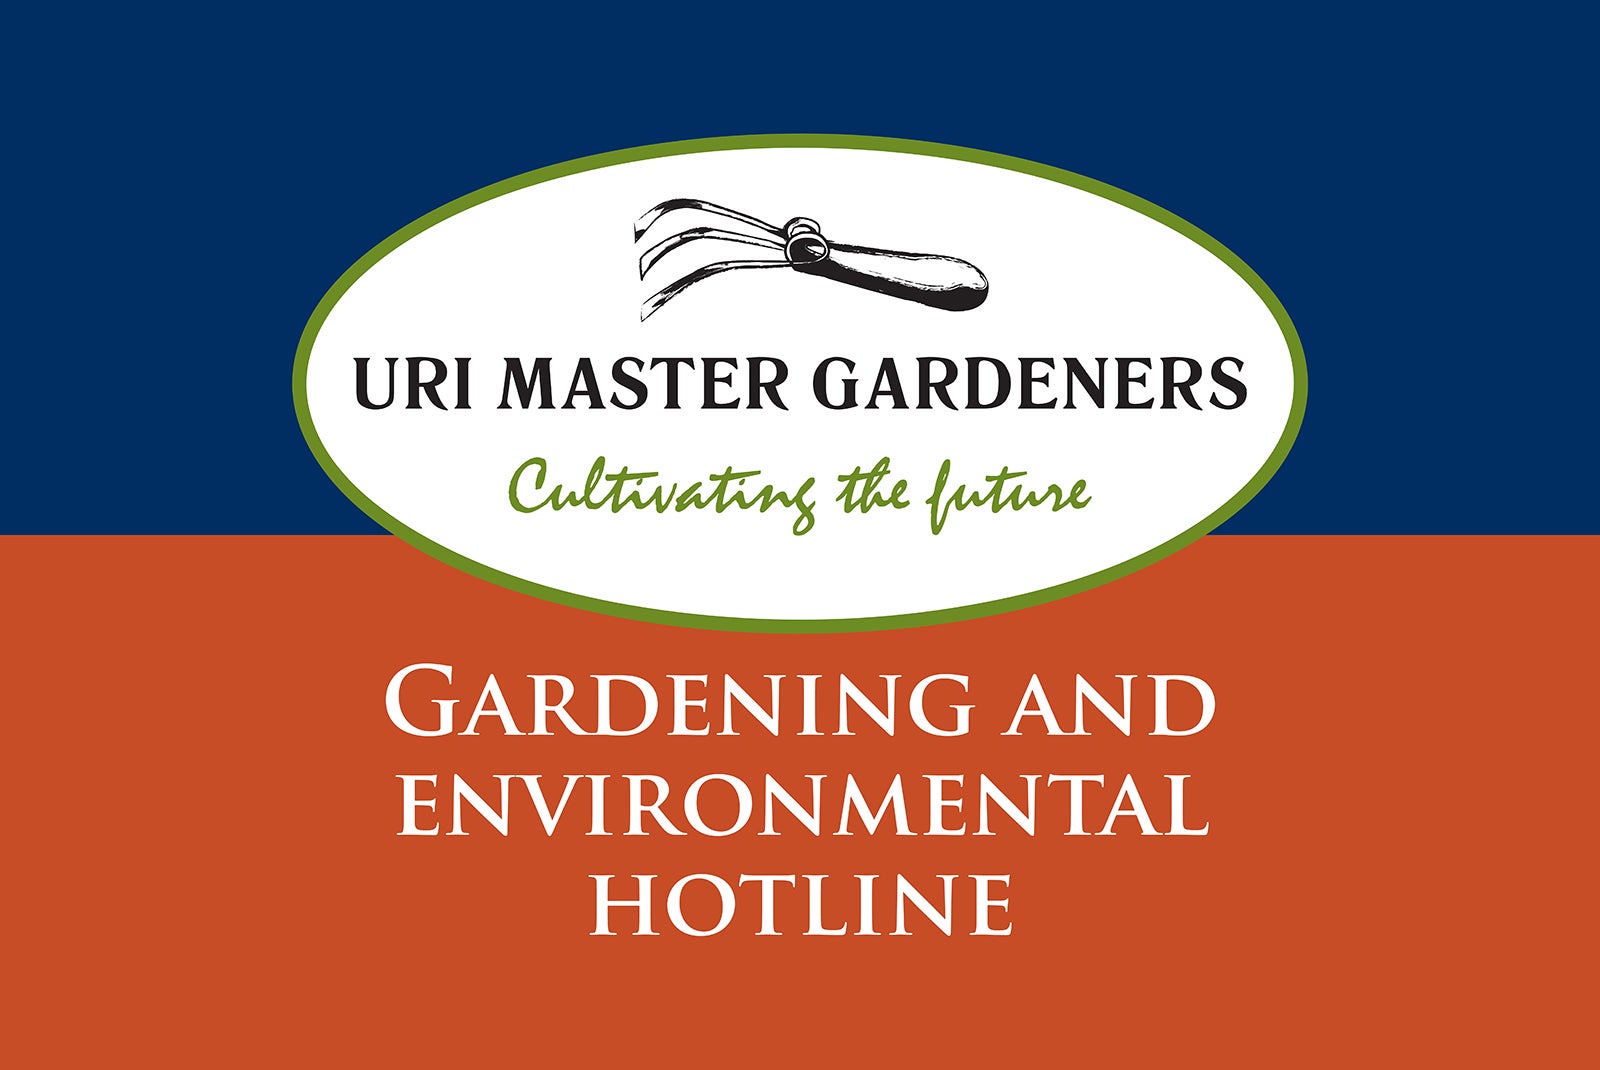 Email: gardener@uri.edu 
Phone: (401) 874-4836